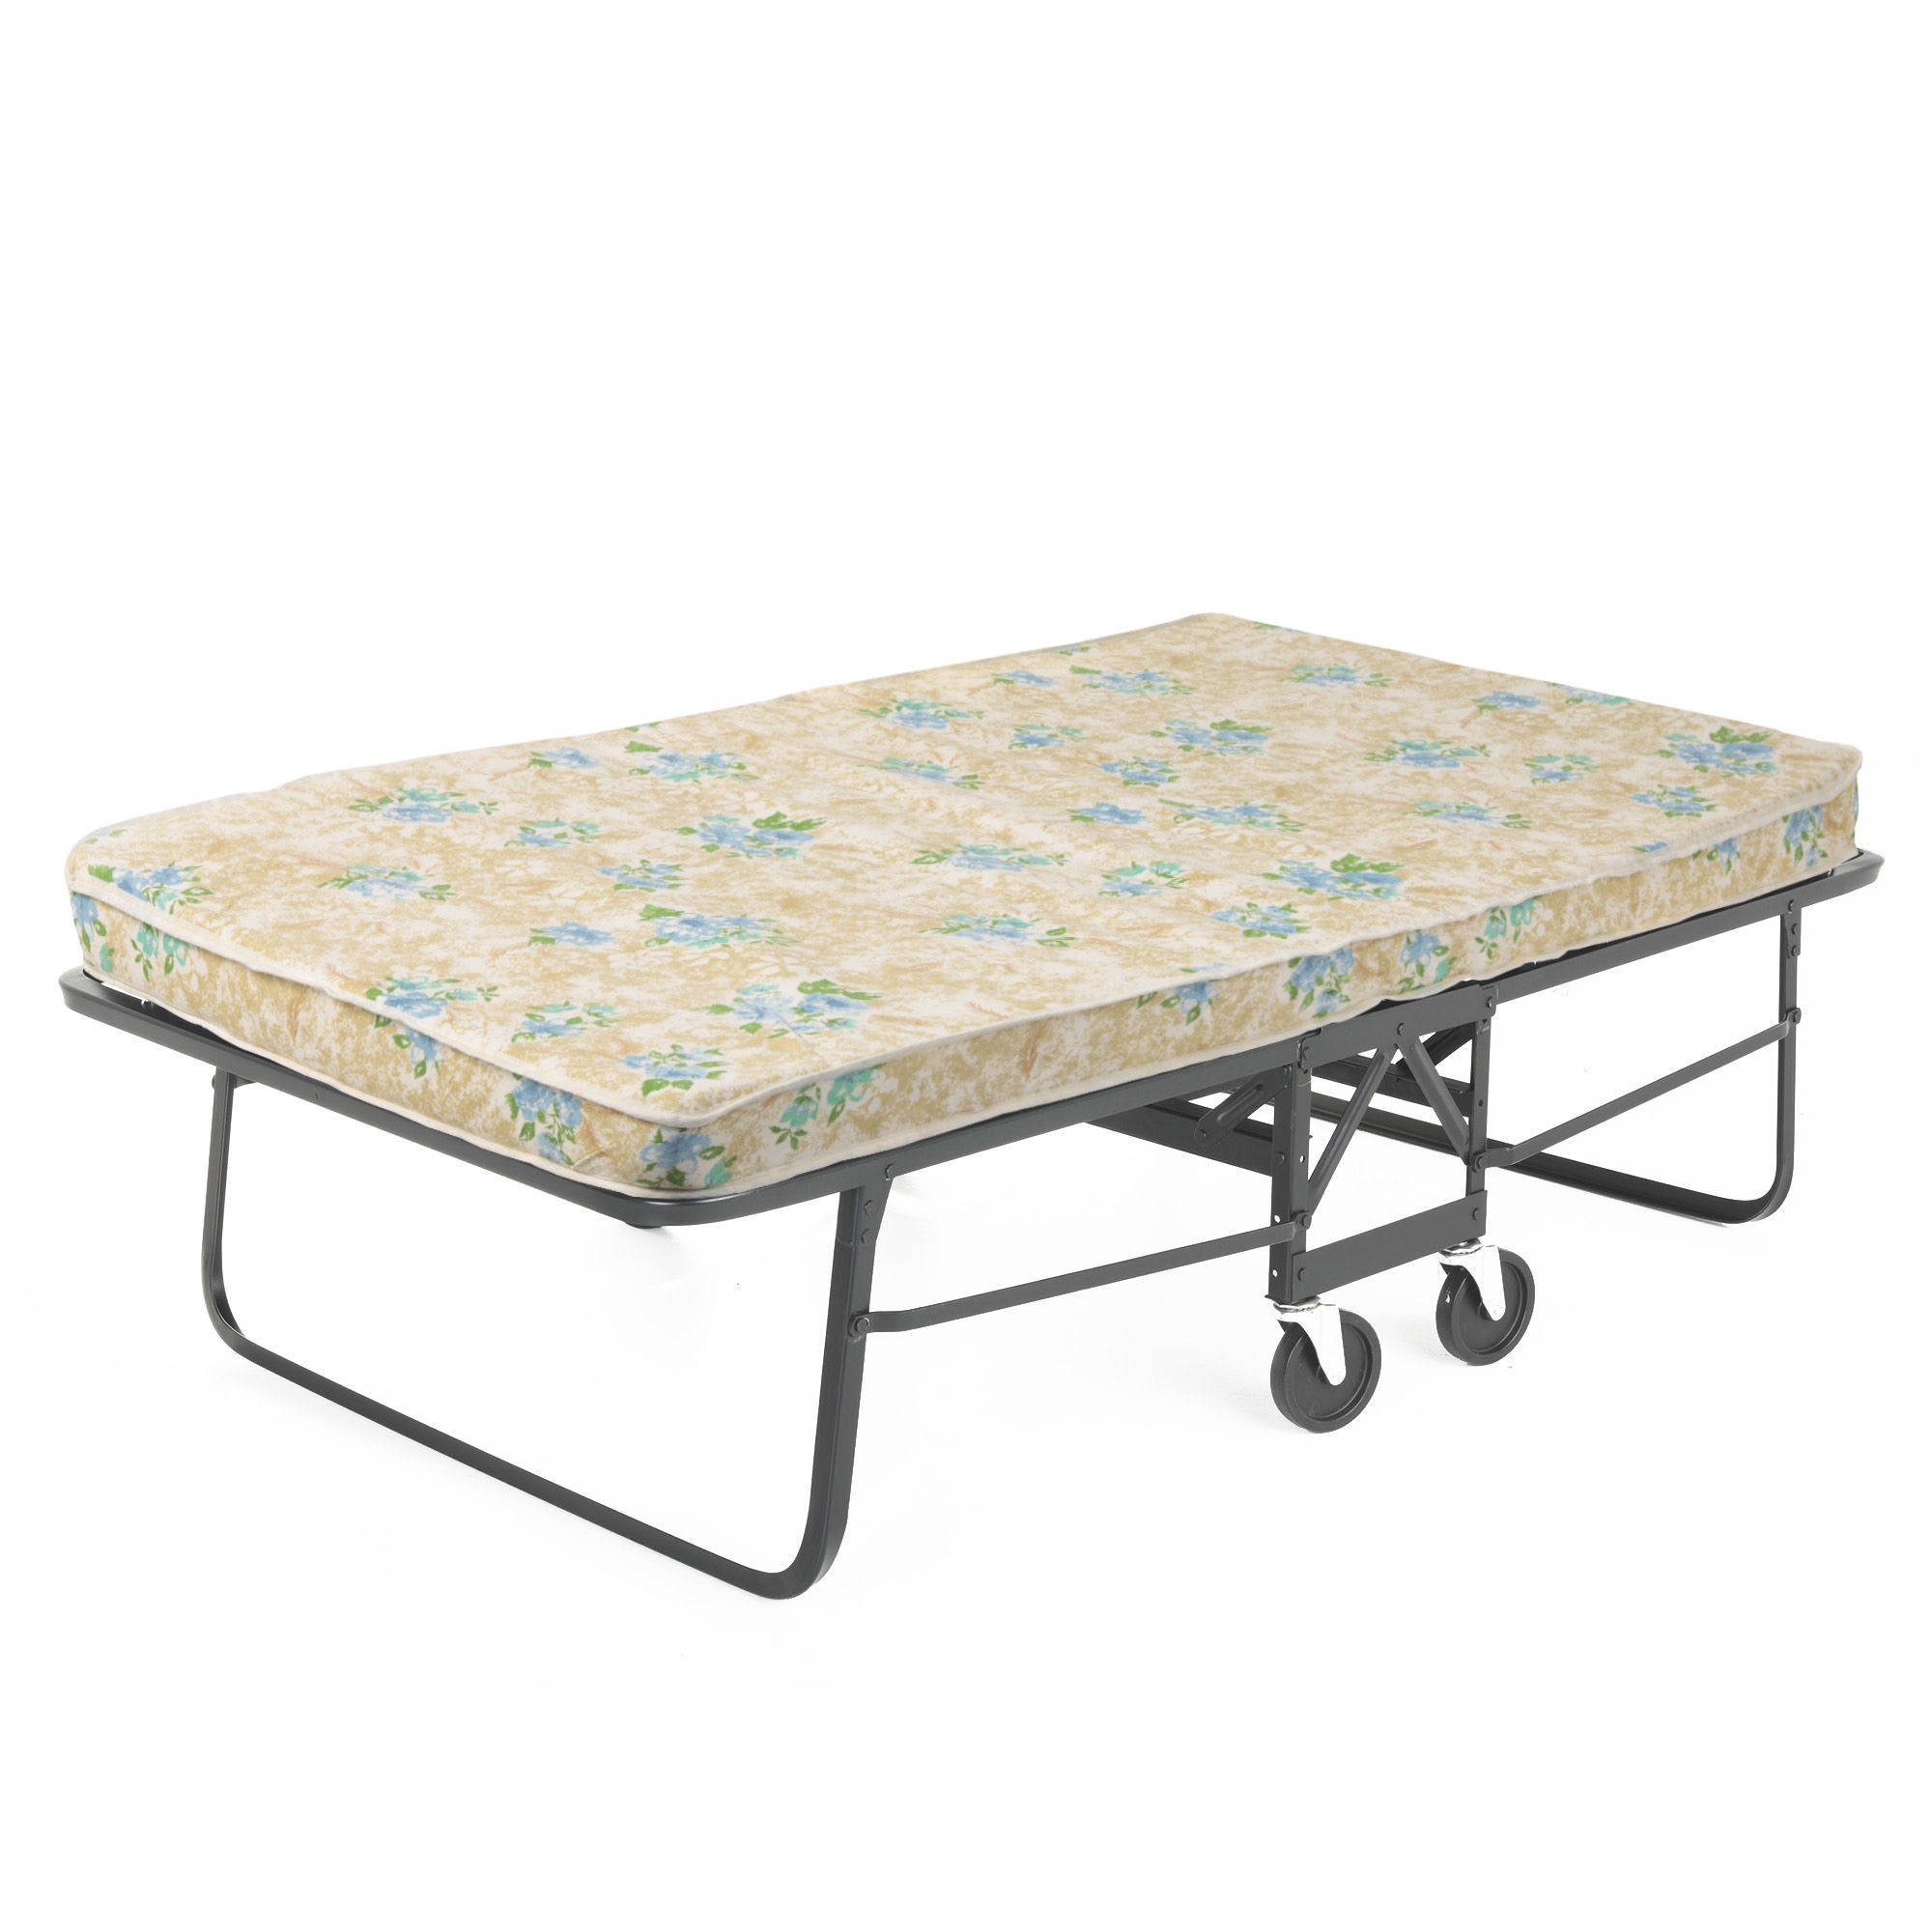 30 inch wide cot mattress